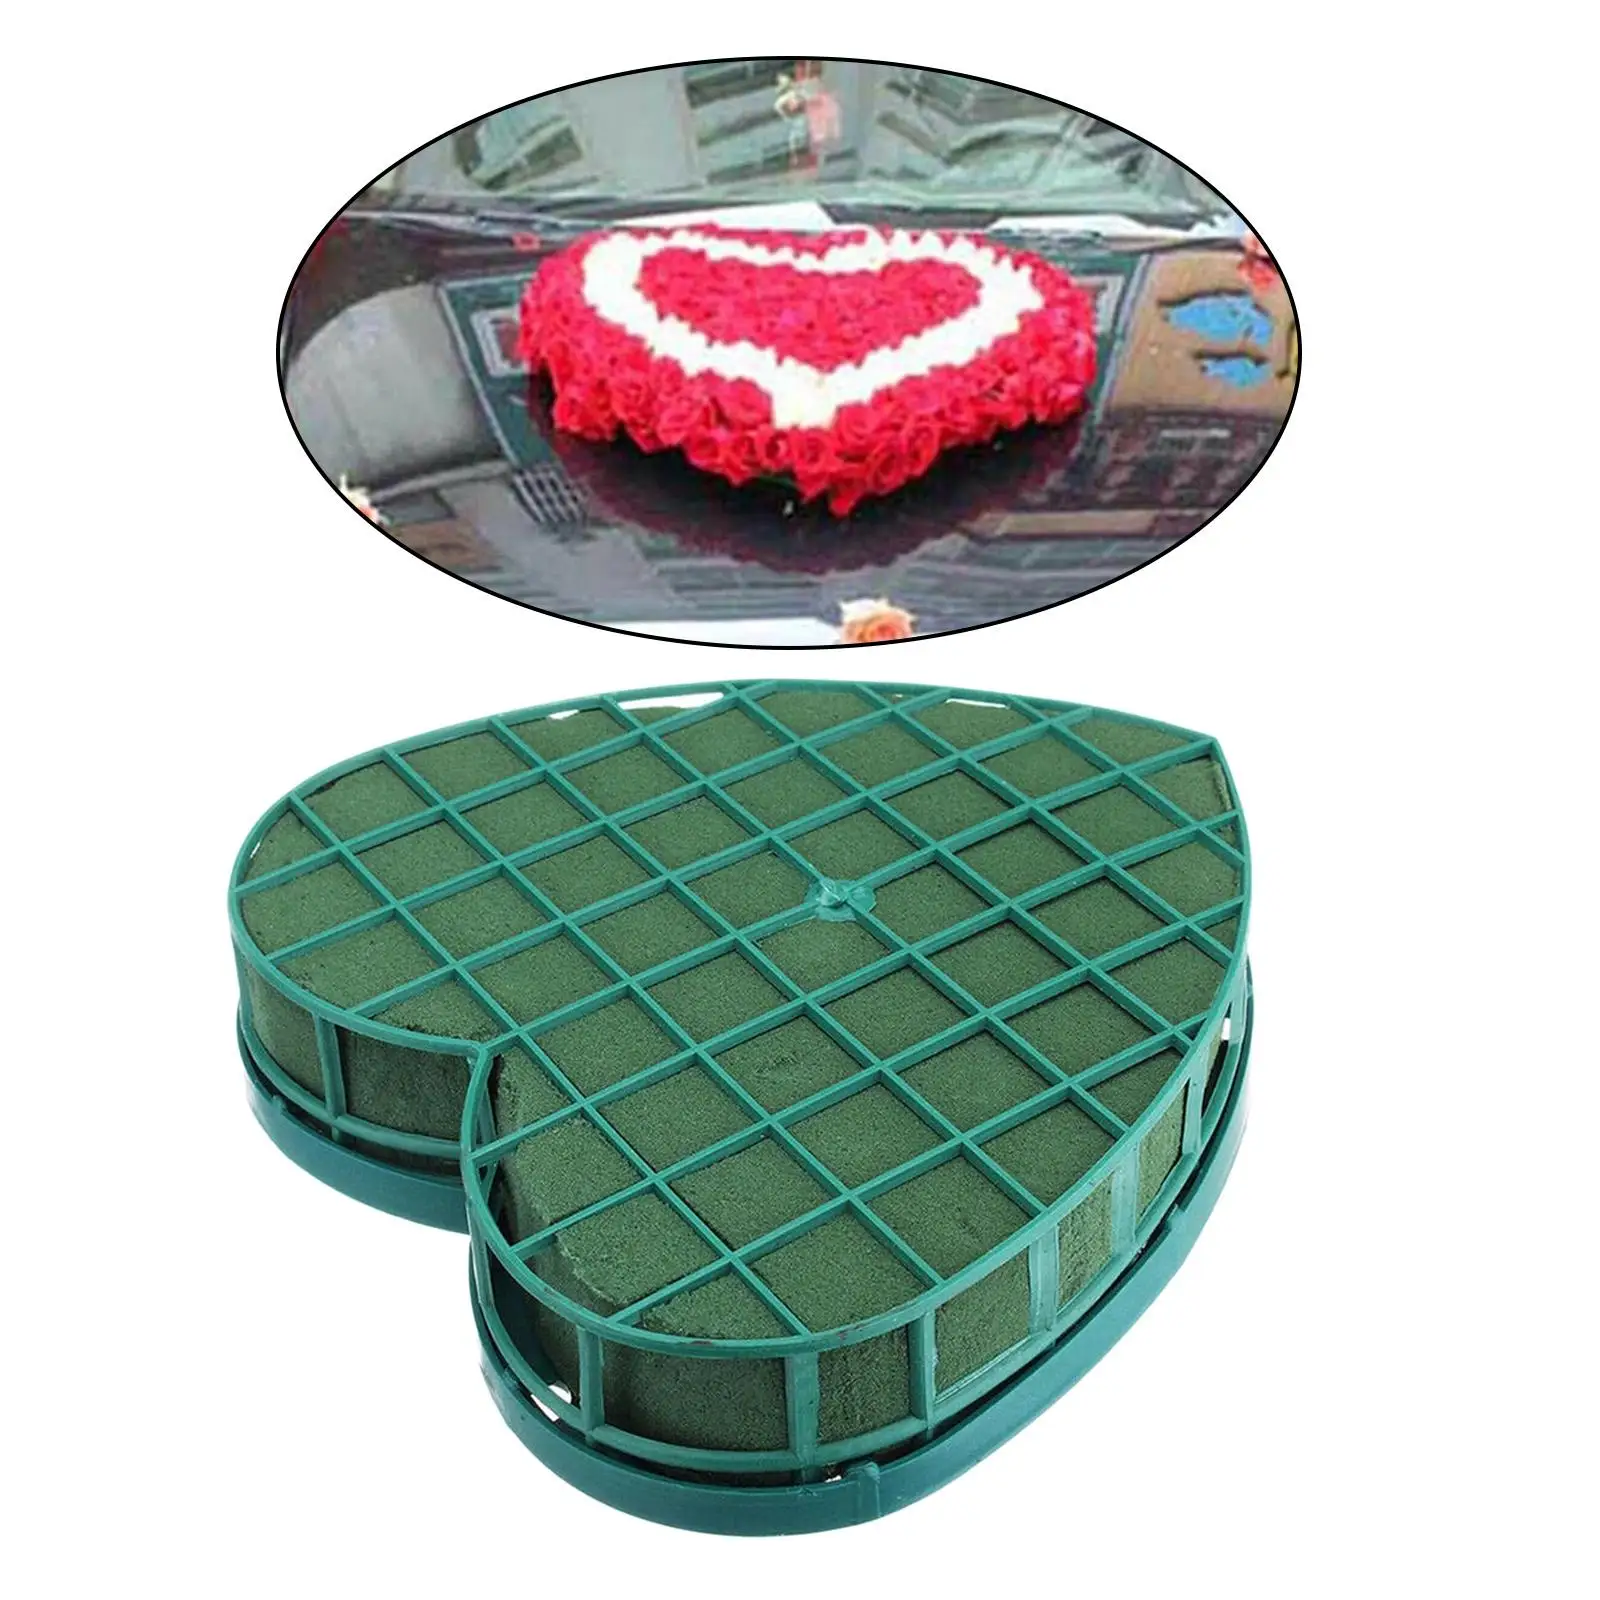 Flower Foam Blocks Open Heart Shaped Base Floral Foam Cage Flower Holder for Artificial Flowers or Plants Wedding Car